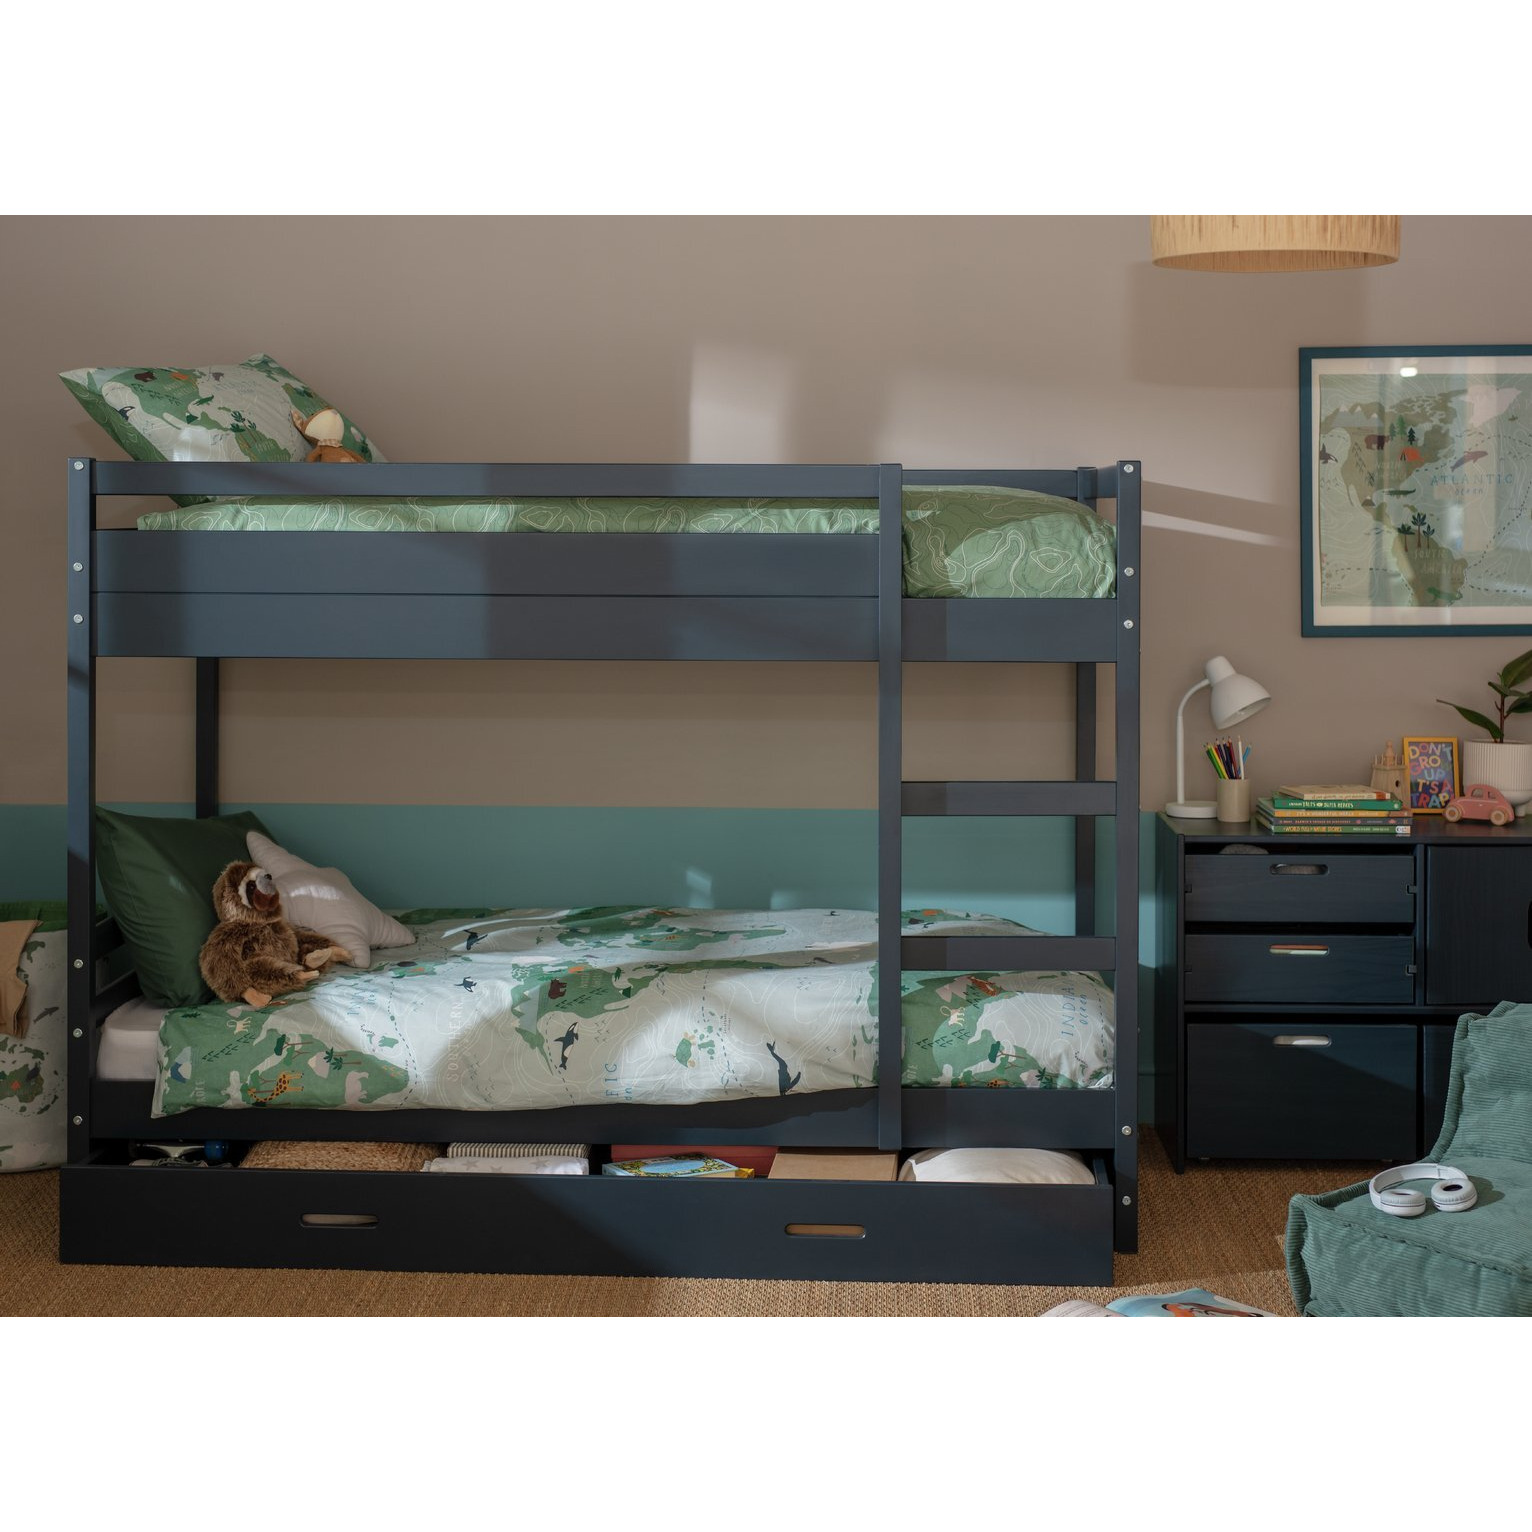 Habitat Rico Bunk Bed Frame With Drawer & 2 Mattress- Blue - image 1